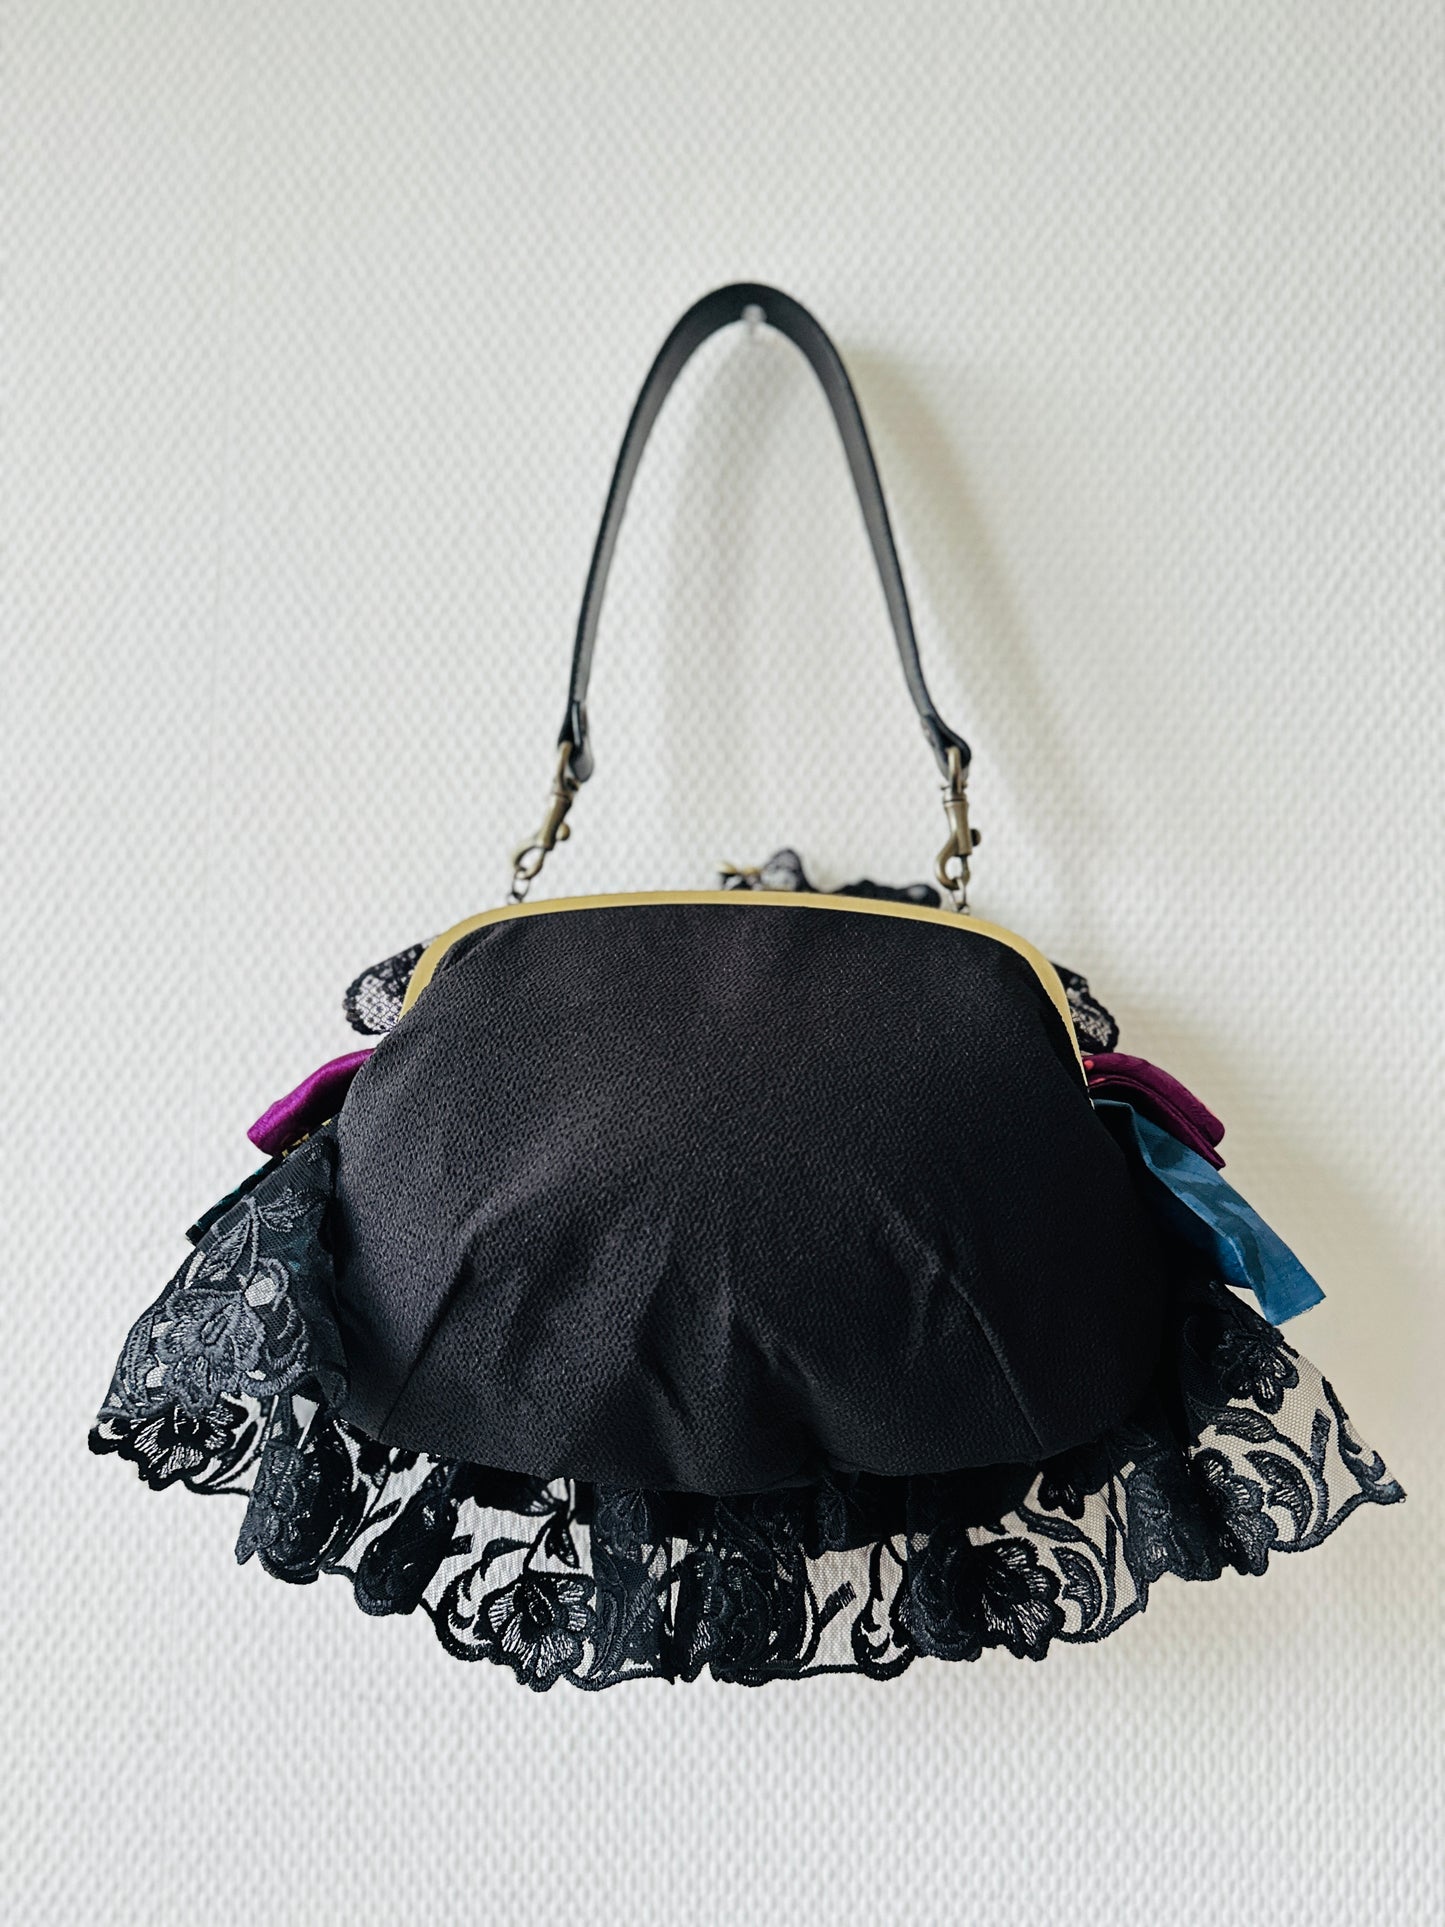 【Gogatsudo】3WAY-Handbag/Black,antique meisen,frills,Clutch,Pouch,Japanese bag,Shoulder bag,Japanese Gifts